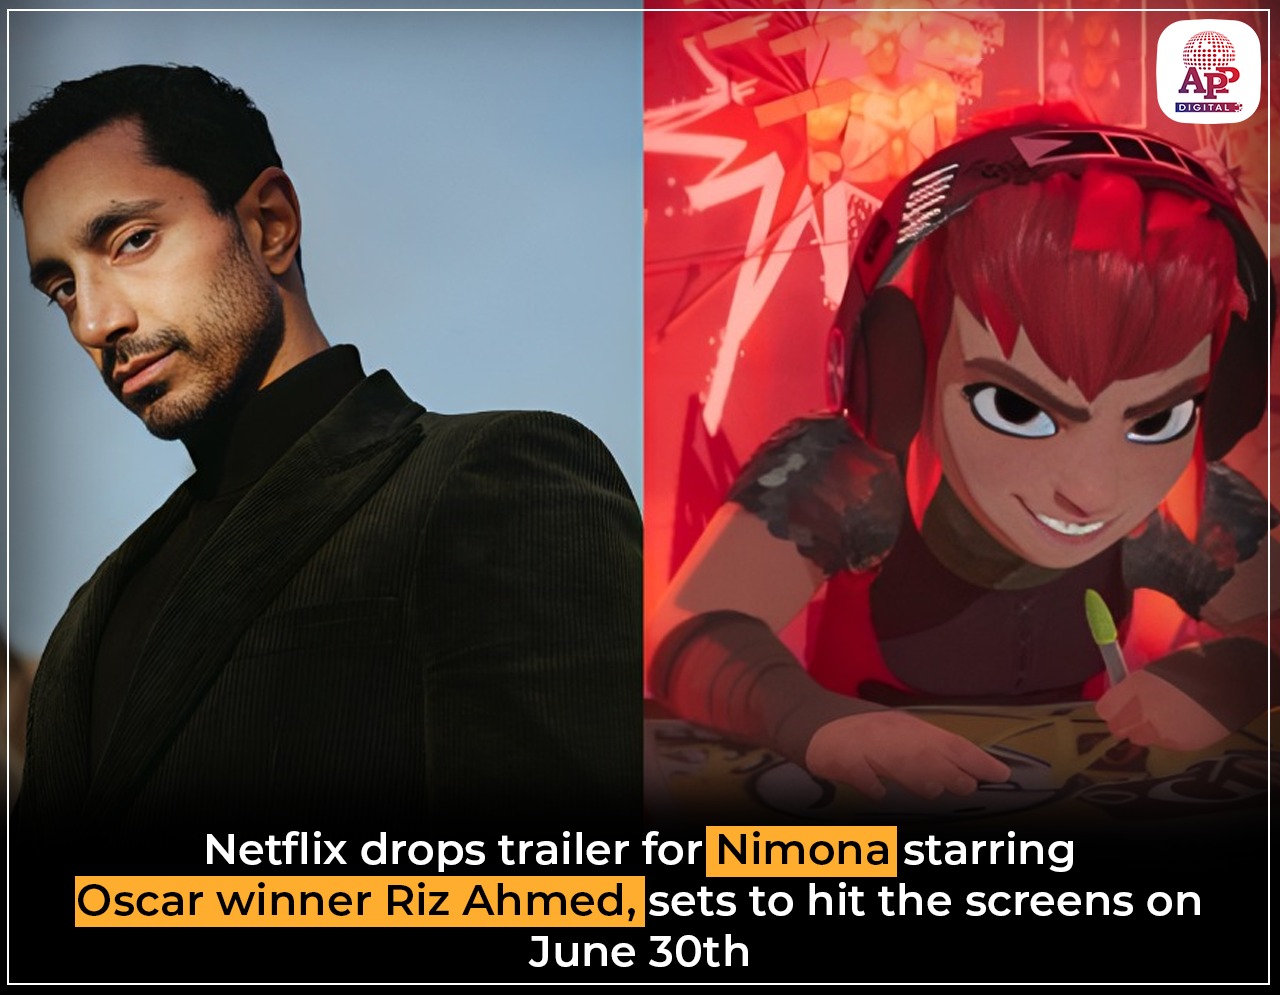 Netflix to release animated film 'Nimona' starring Riz Ahmed